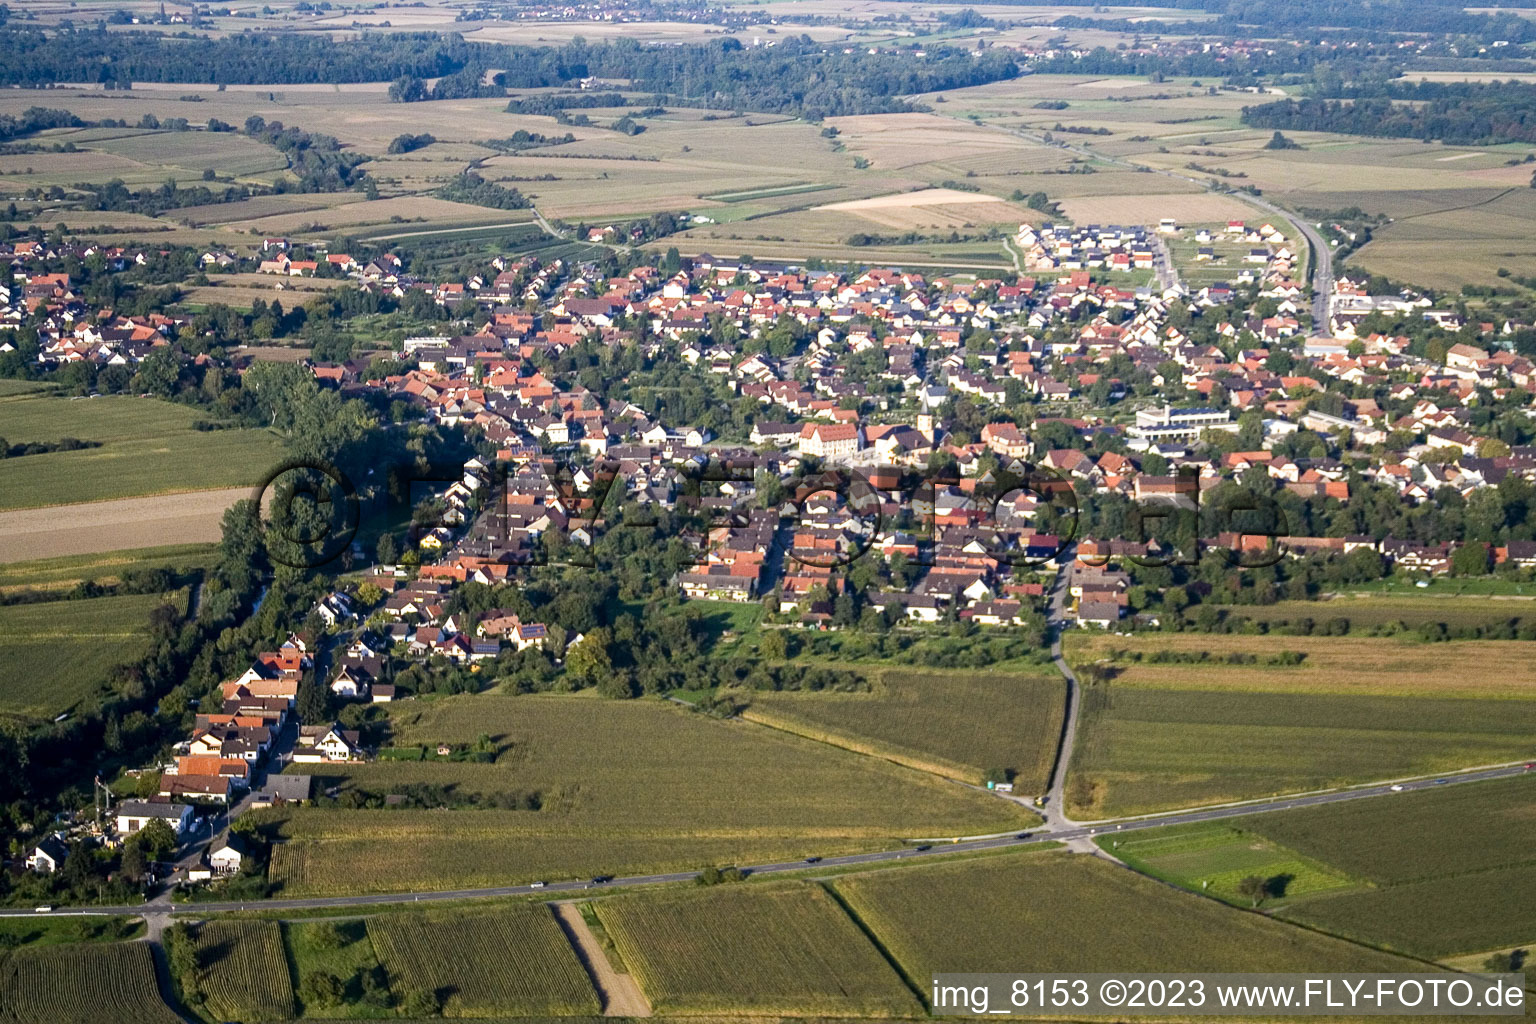 Quartier Freistett in Rheinau dans le département Bade-Wurtemberg, Allemagne vue d'en haut